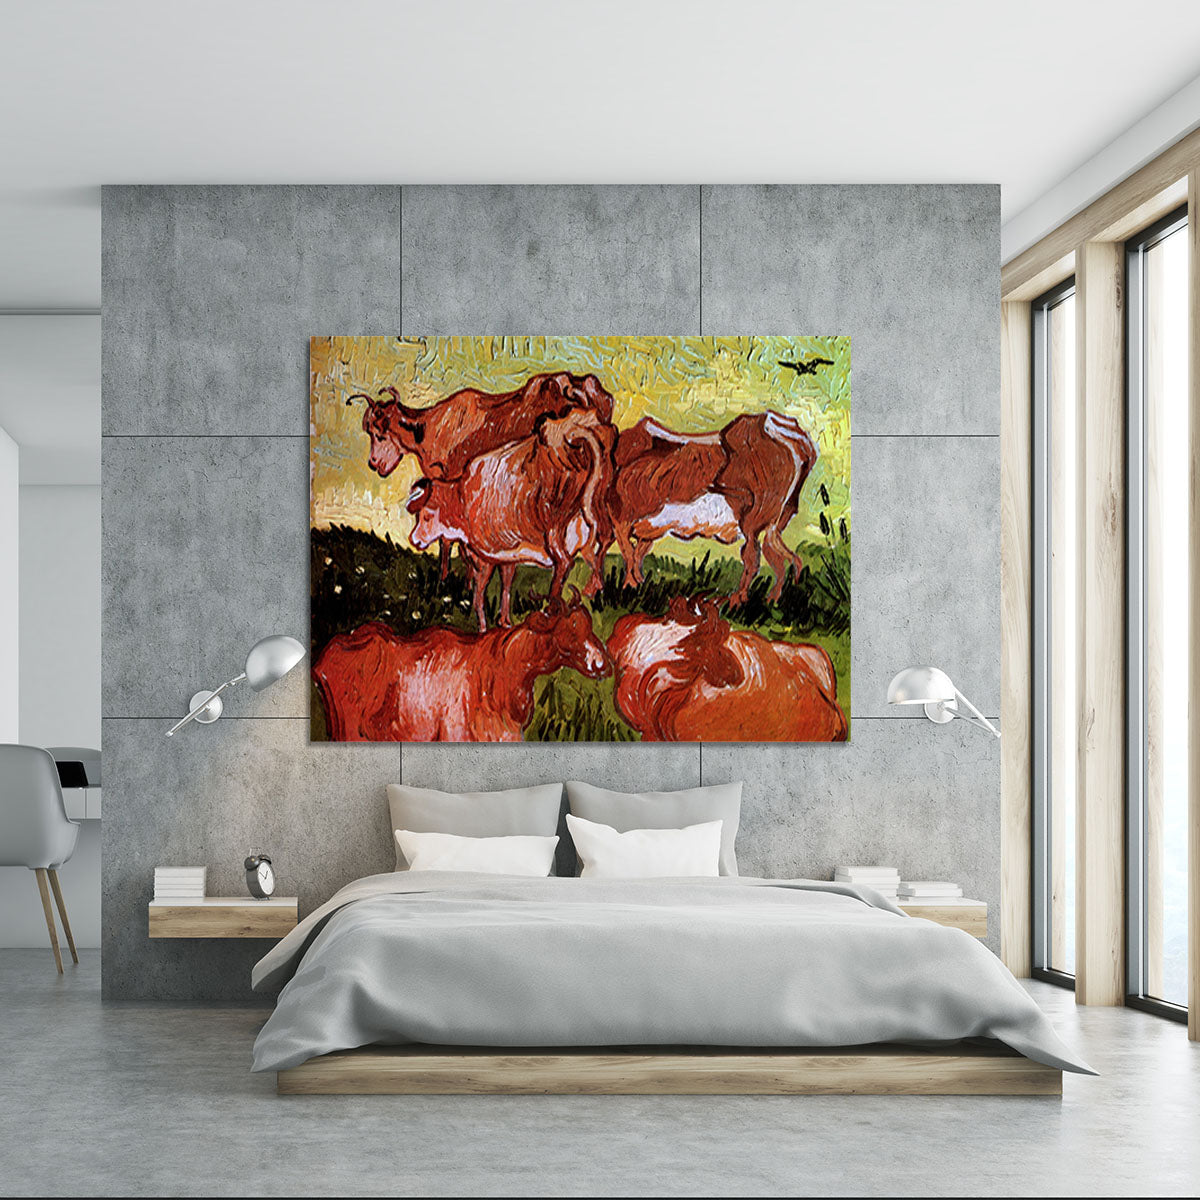 Cows after Jordaens by Van Gogh Canvas Print or Poster - Canvas Art Rocks - 5